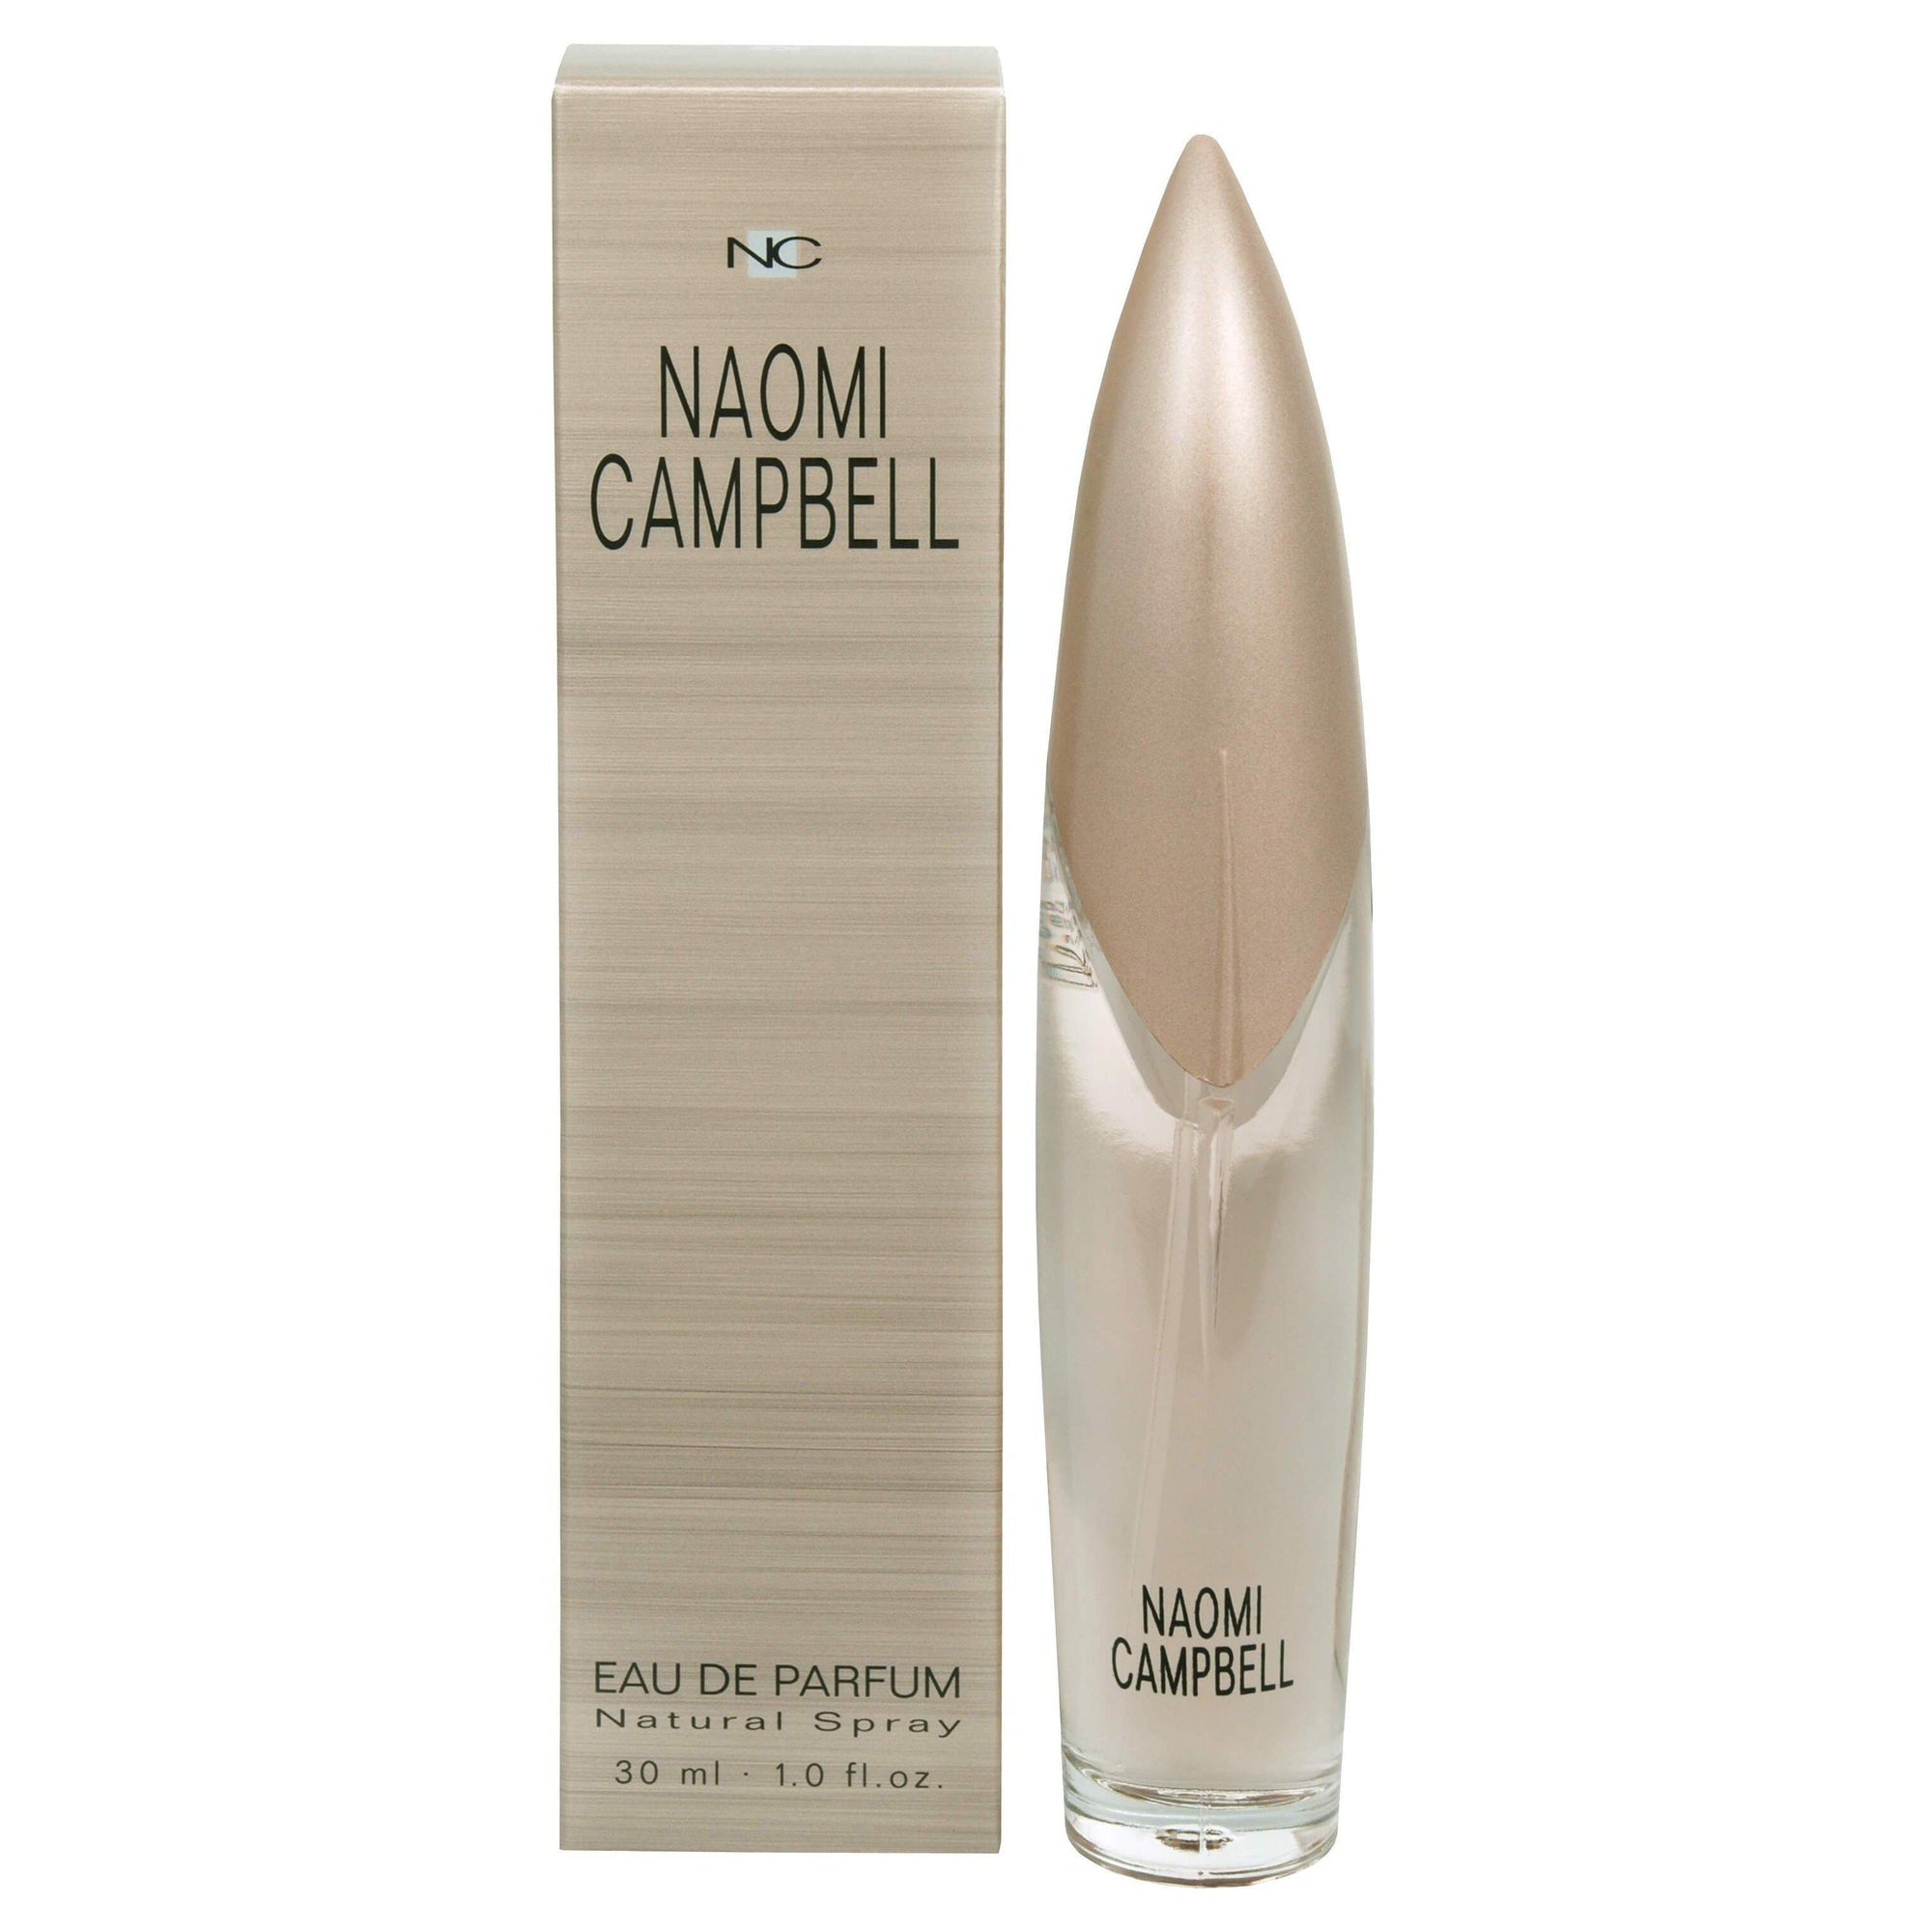 Naomi Campell parfume 30ml